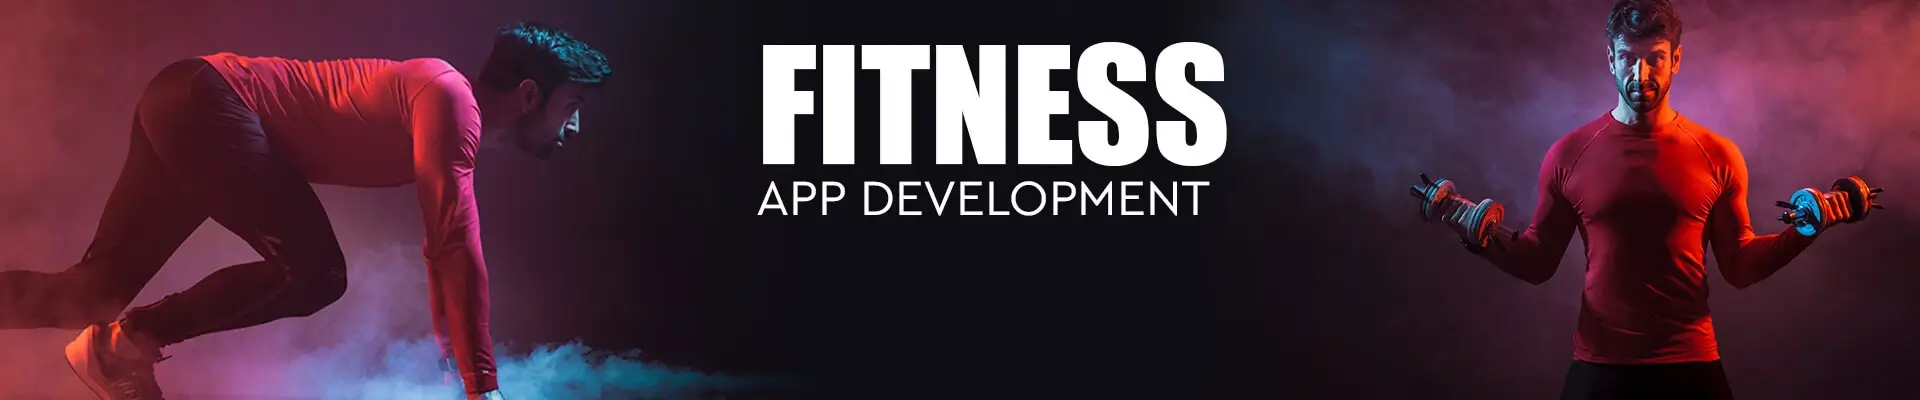 fitness app development company-auxano global services